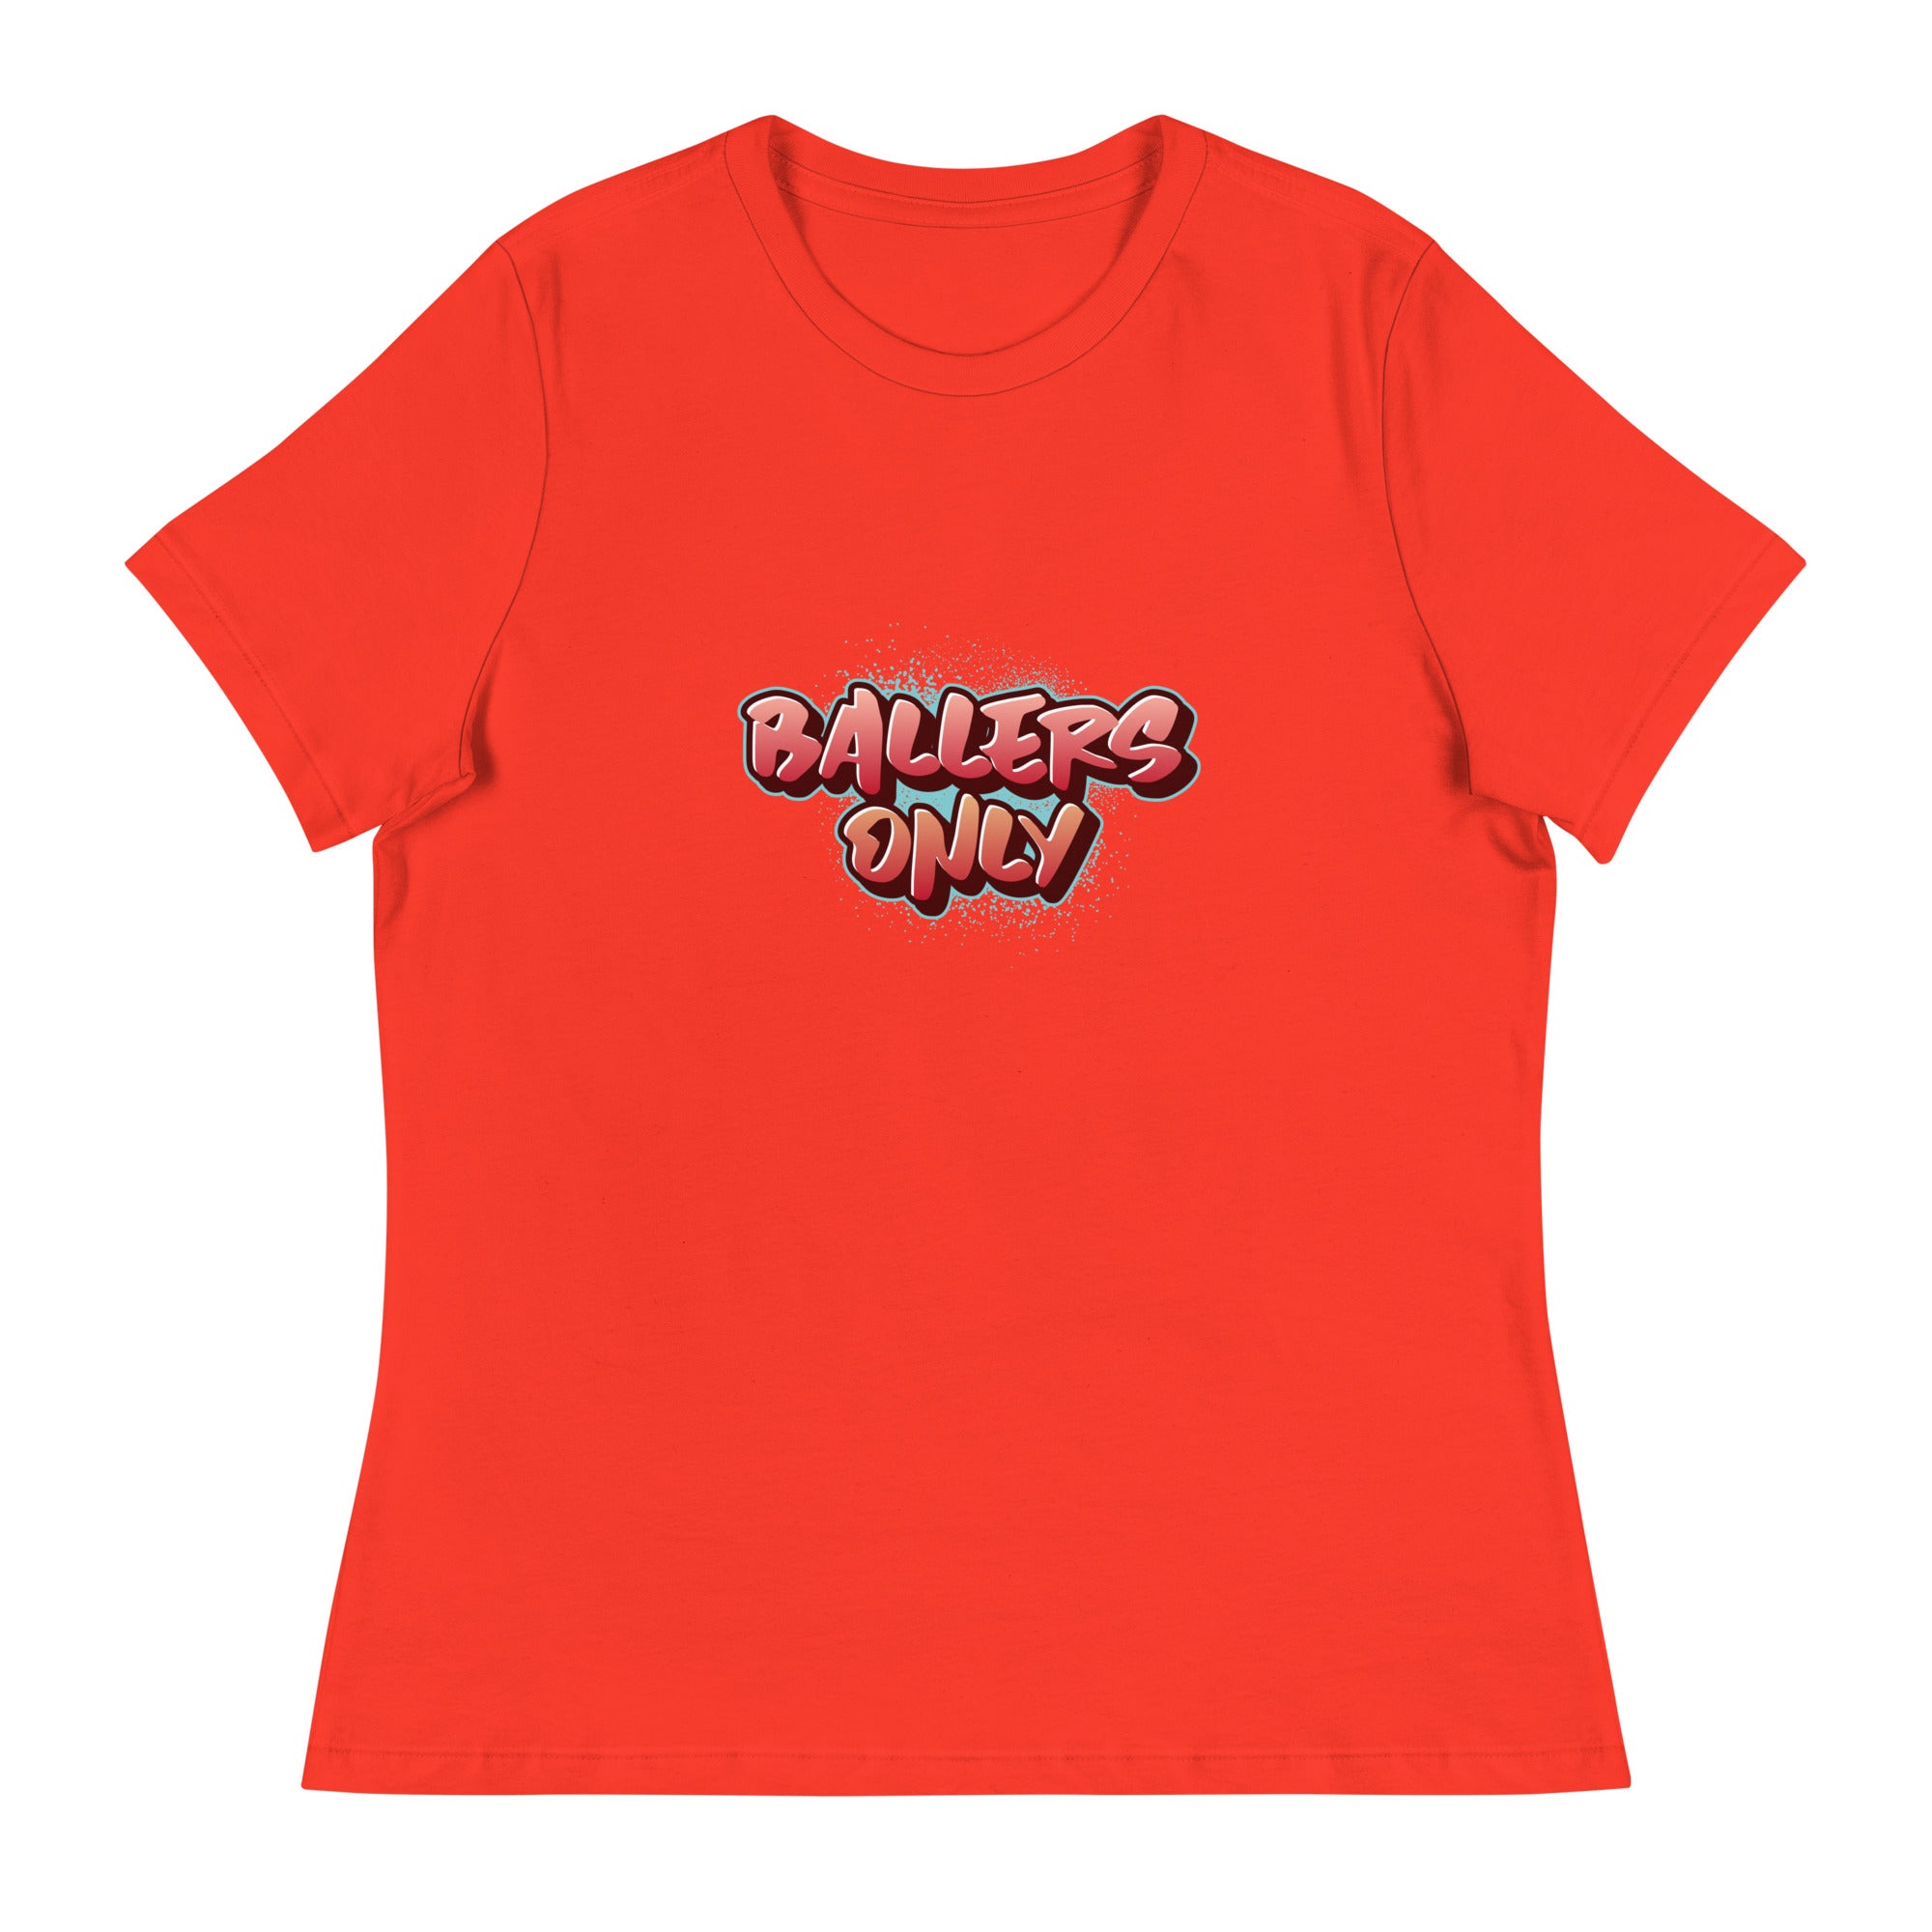 Women's "Ballers Only"  Relaxed T-Shirt